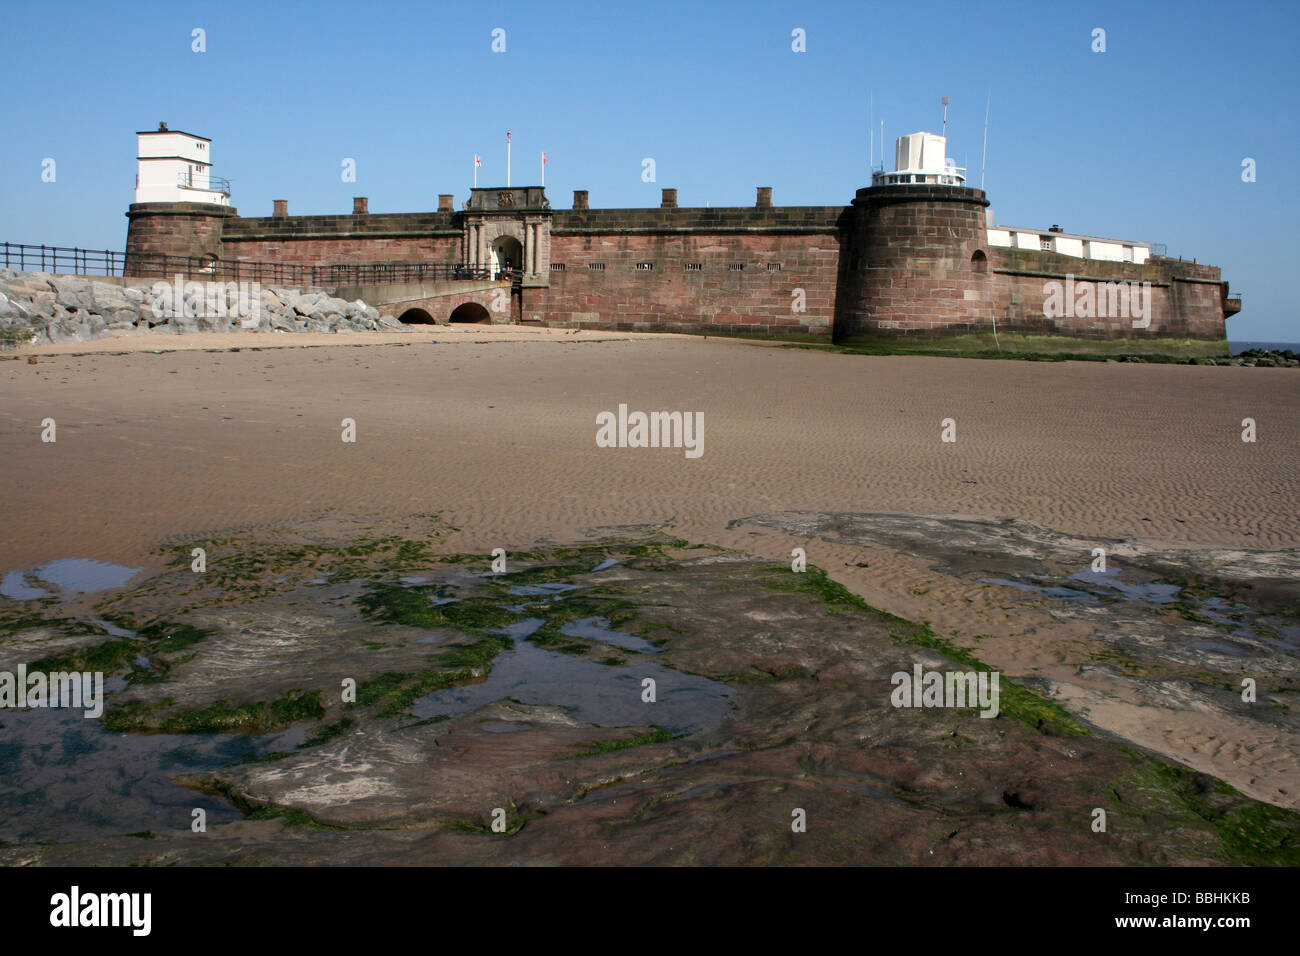 Fort Perch Rock in New Brighton, Wallasey, Wirral, Merseyside, UK Stockfoto